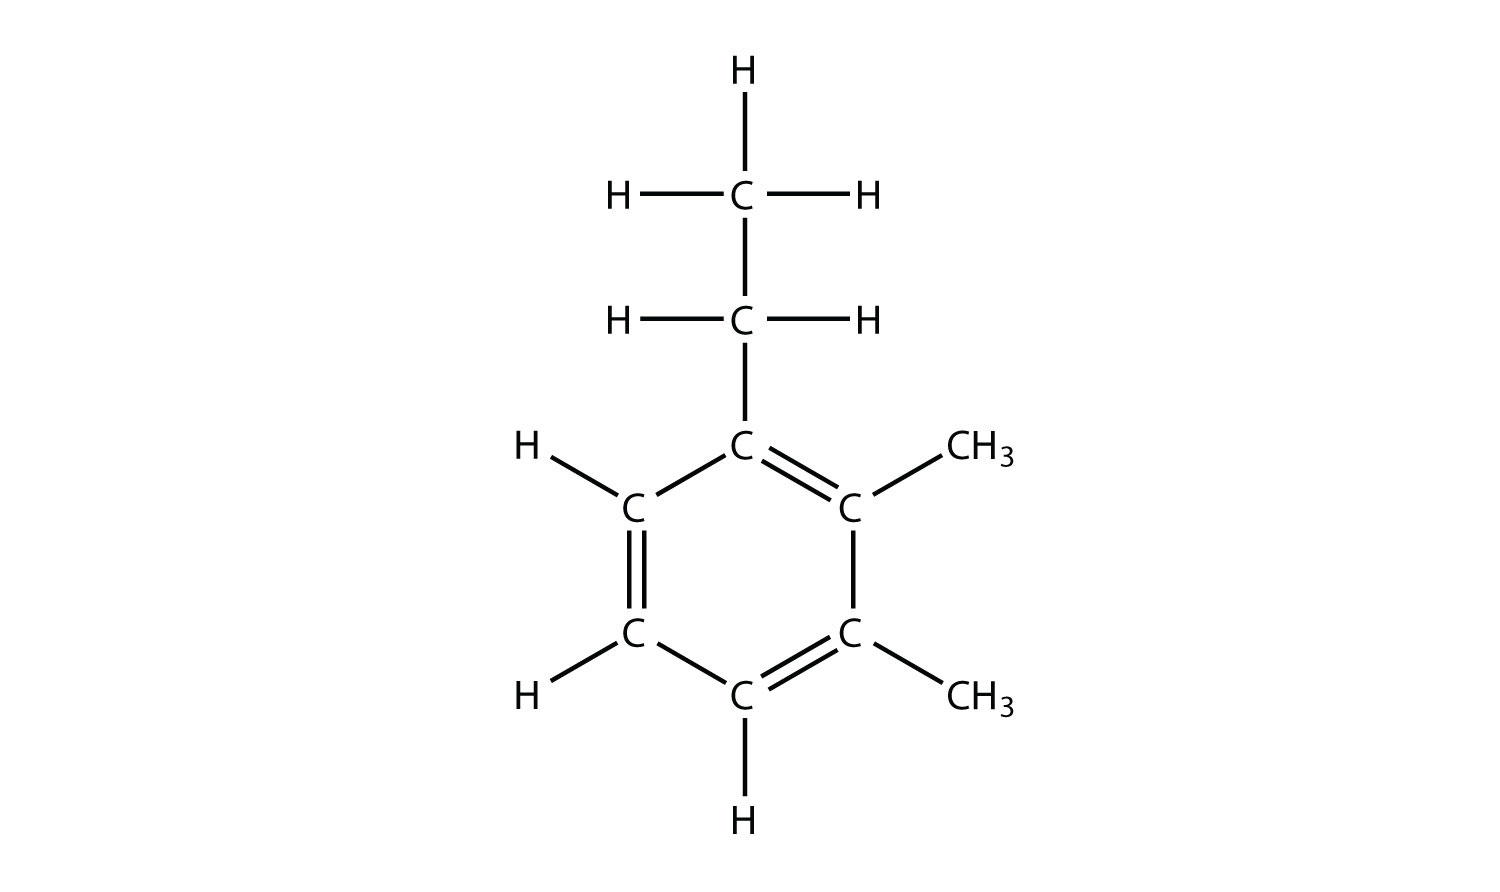 Structural formula of aromatic compound 1-ehtyl-2,3dimethyl-benzene.